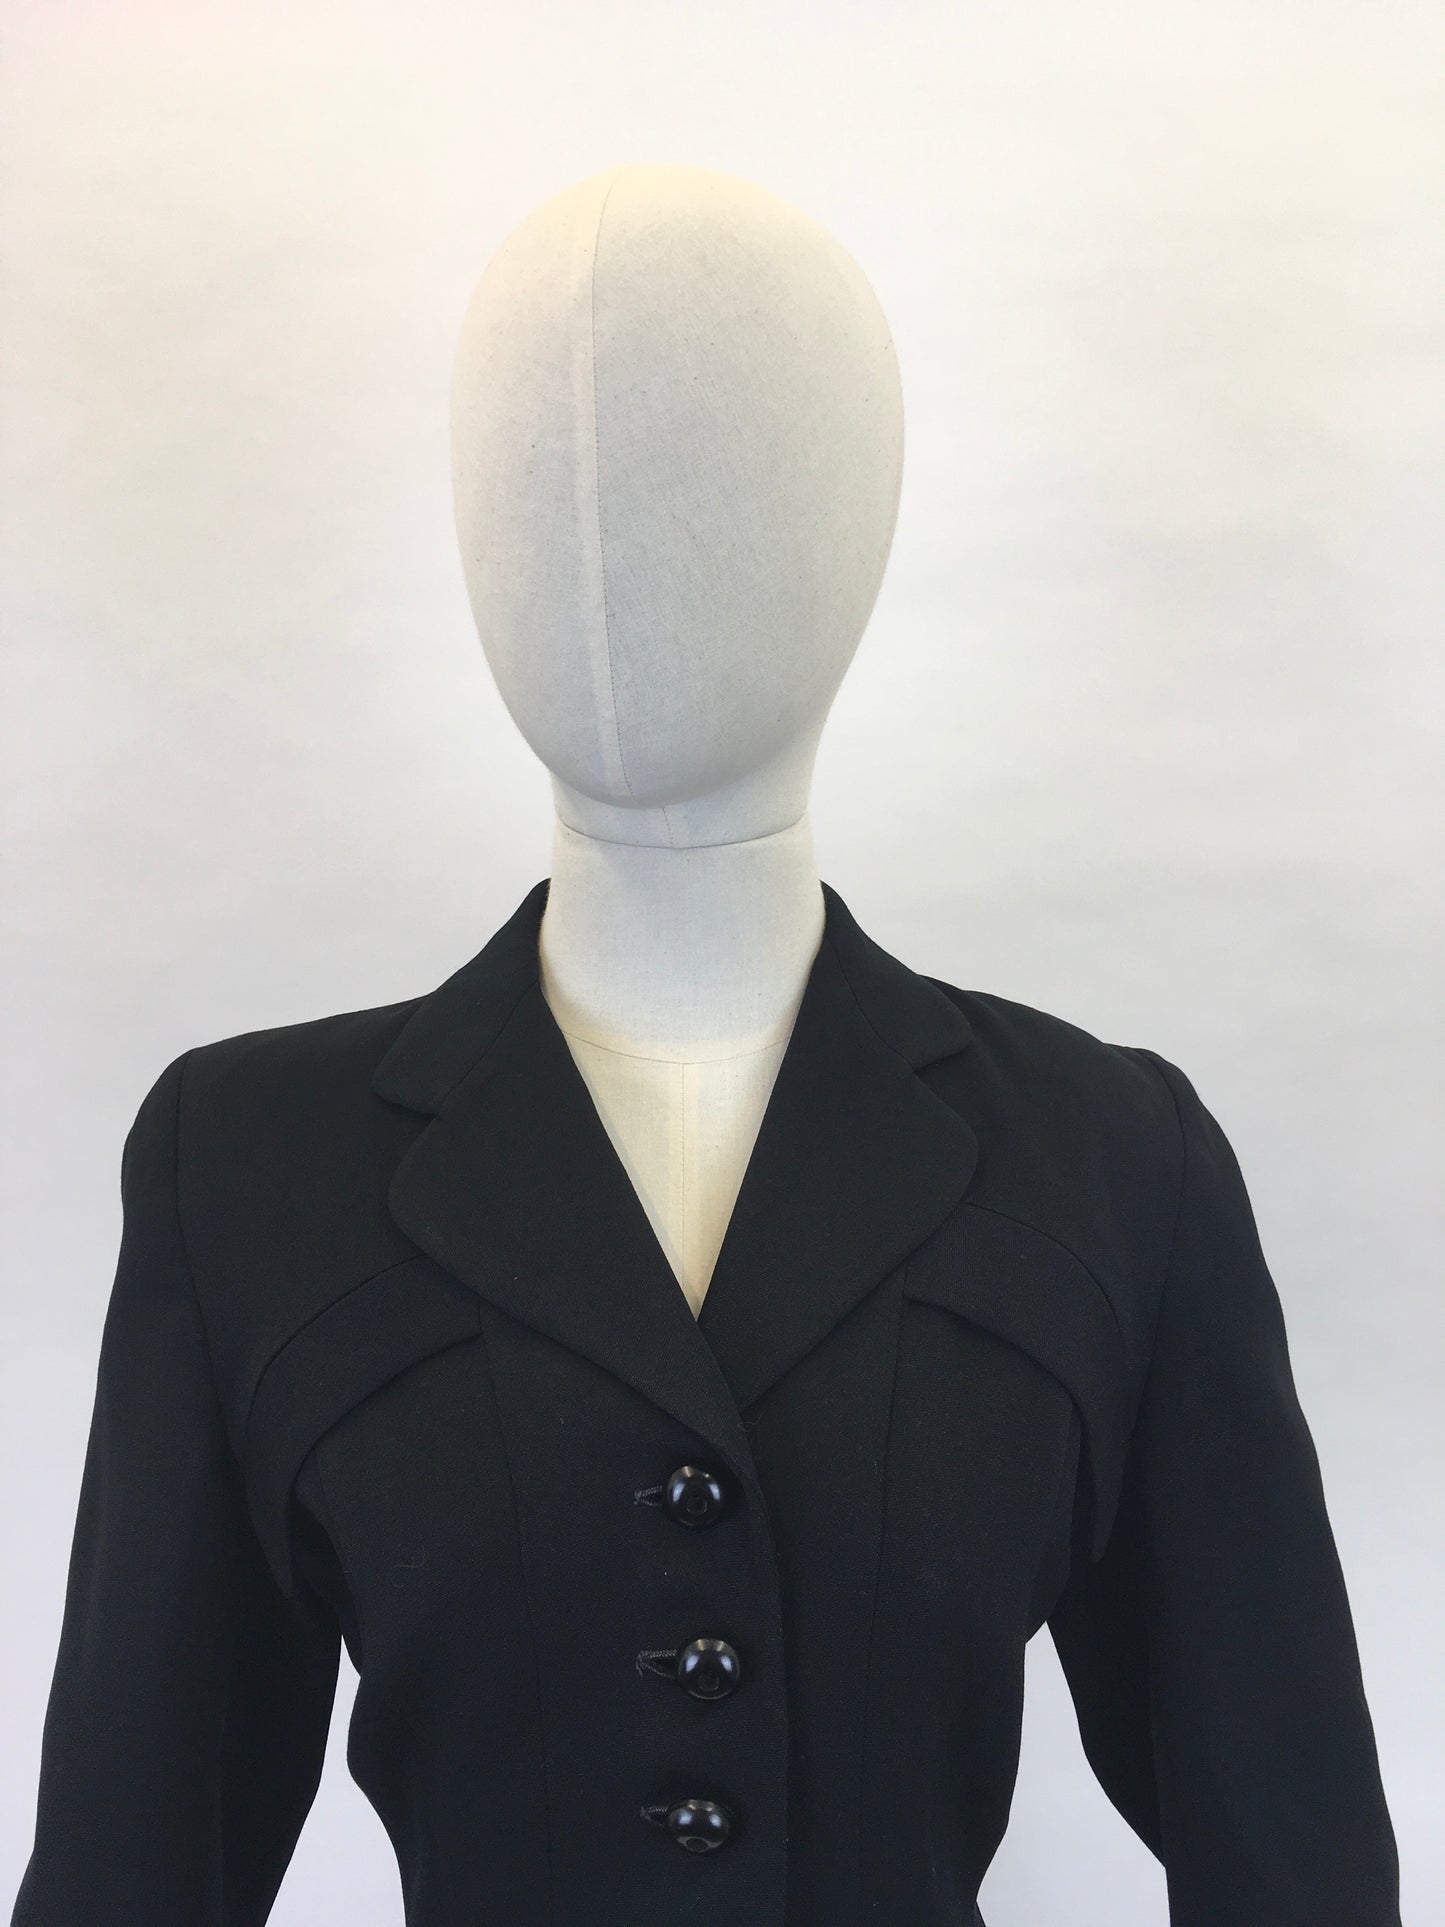 Original 1940s Black Longline Jacket - With a ‘ Vogue Original ‘ Label